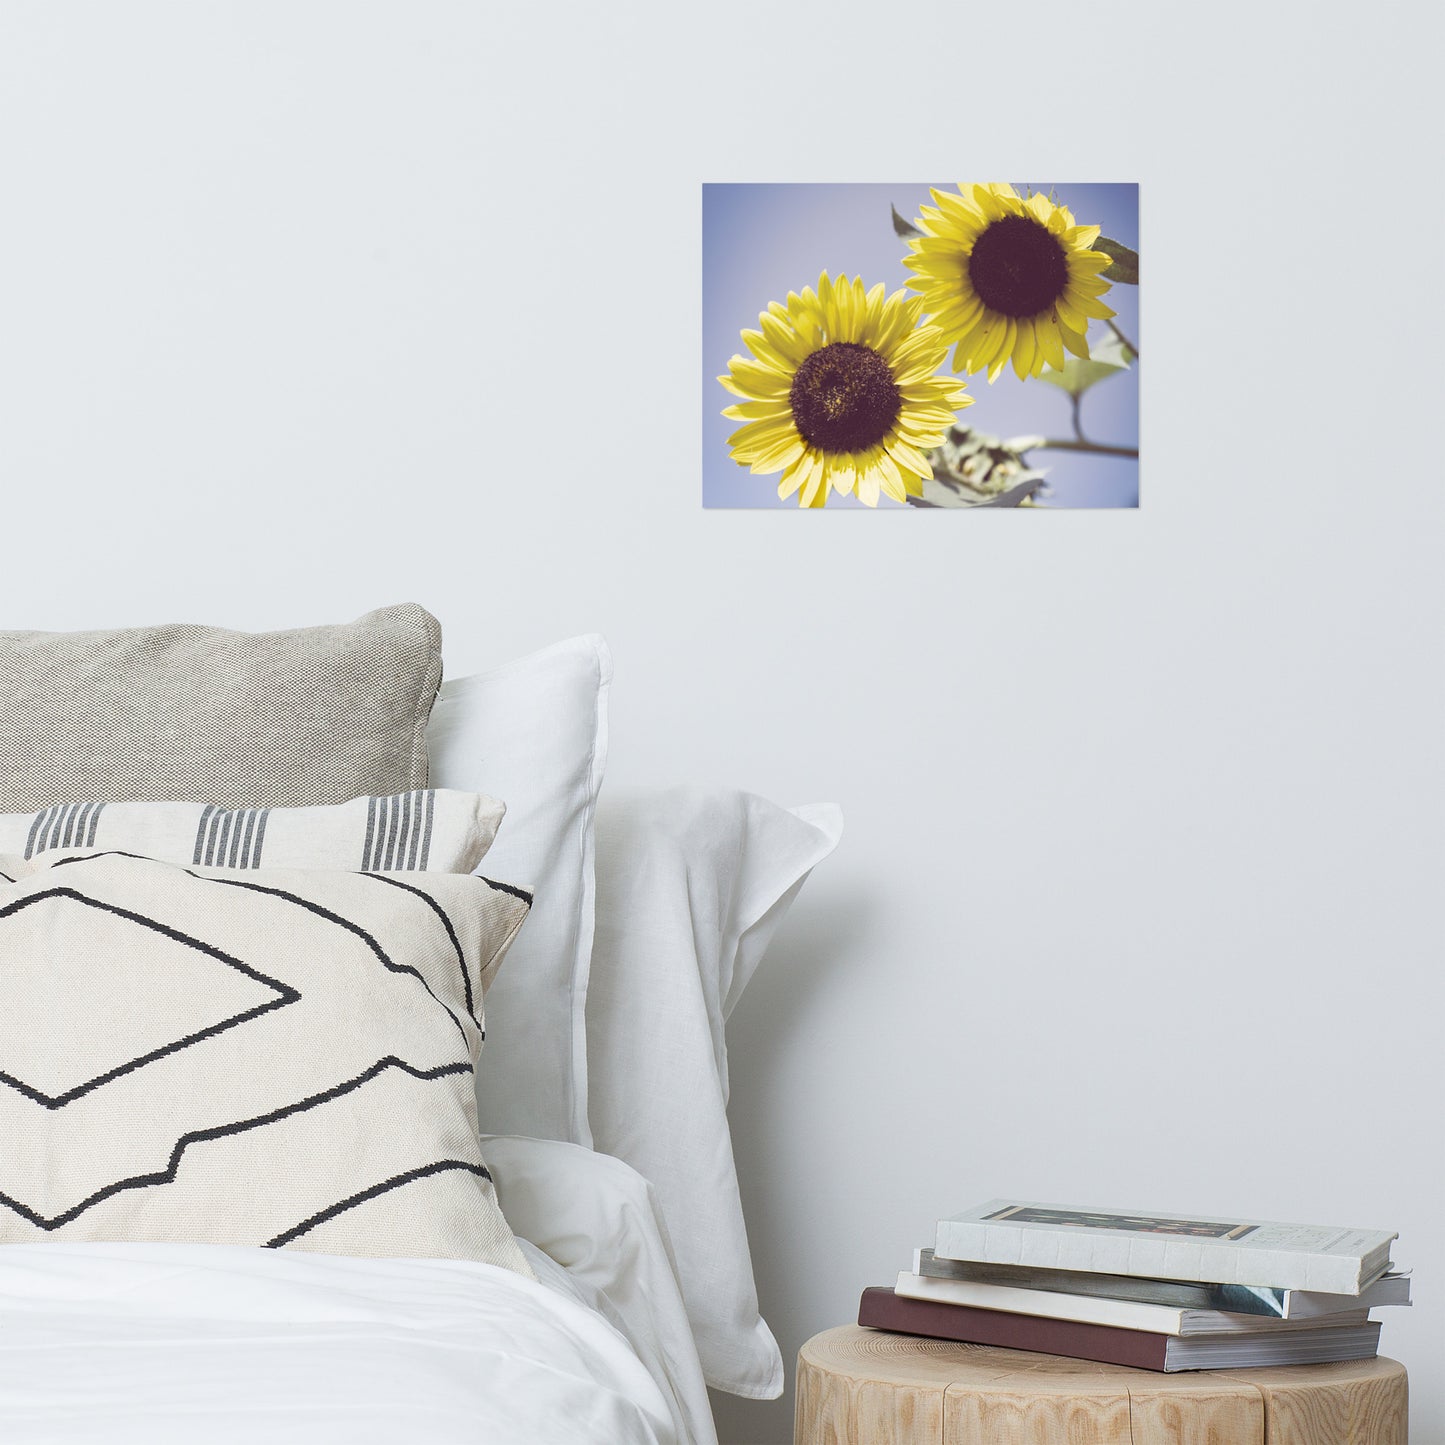 Minimalist Floral Print: Aged Sunflowers Against Sky - Botanical / Floral / Flora / Flowers / Nature Photograph Loose / Unframed / Frameable / Frameless Wall Art Print - Artwork